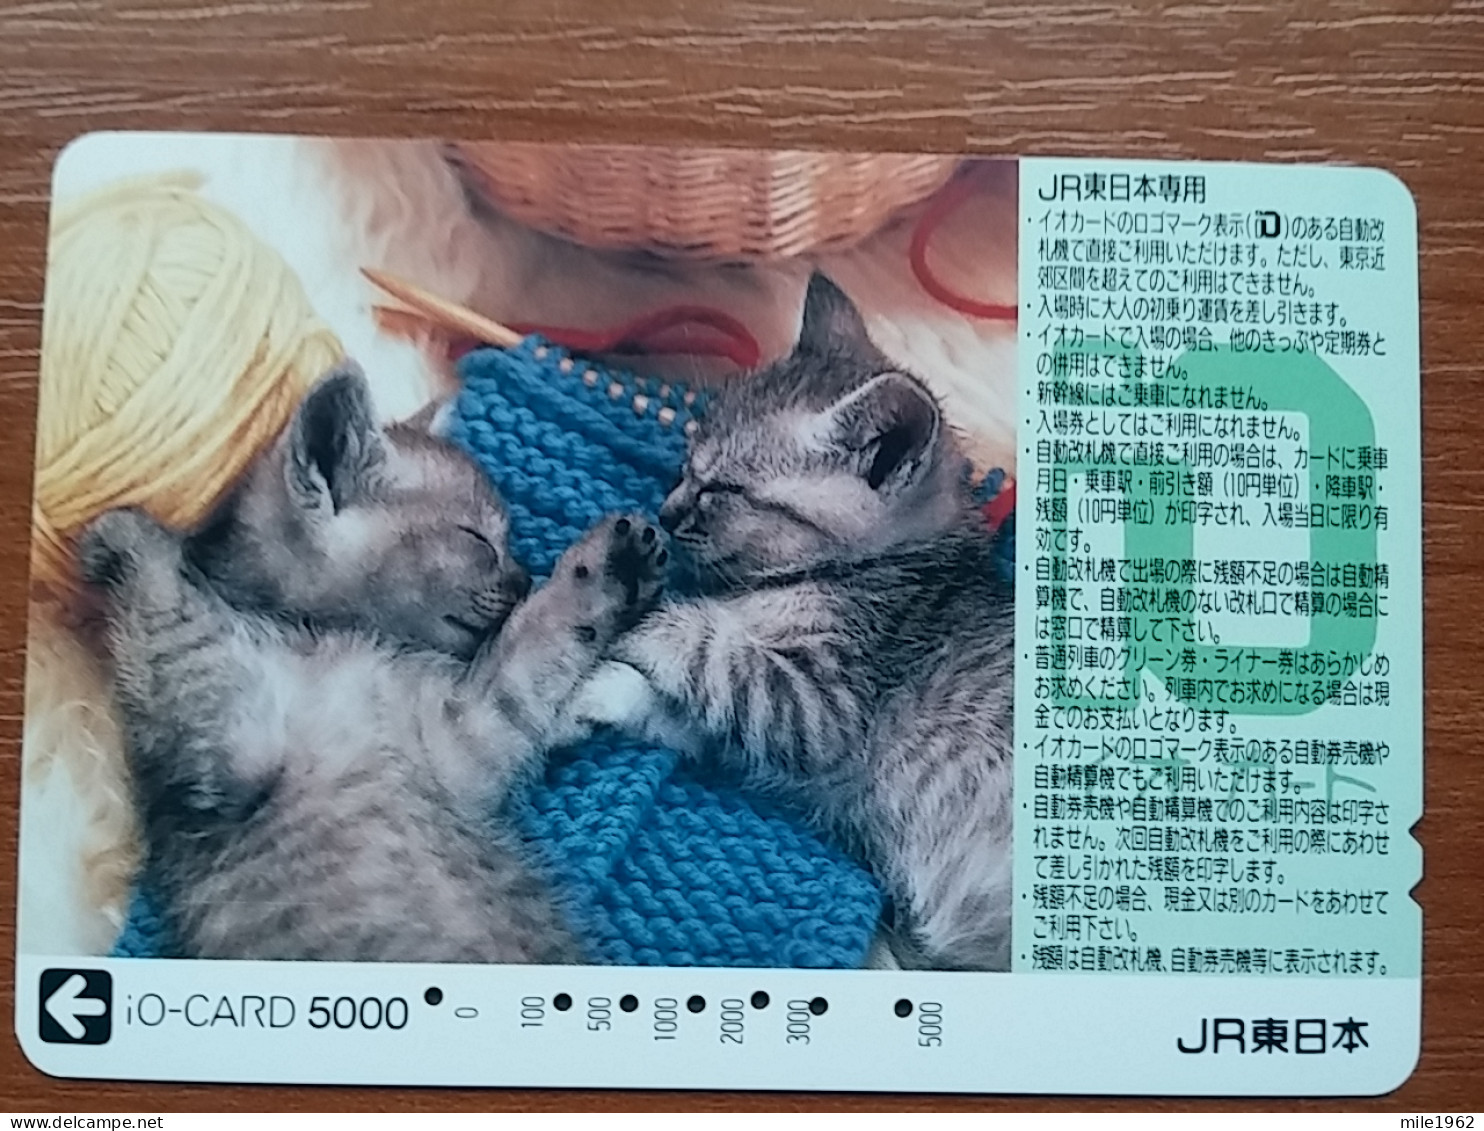 T-402 - JAPAN, Japon, Nipon, Carte Prepayee, Prepaid Card, CAT, CHAT,  - Chats